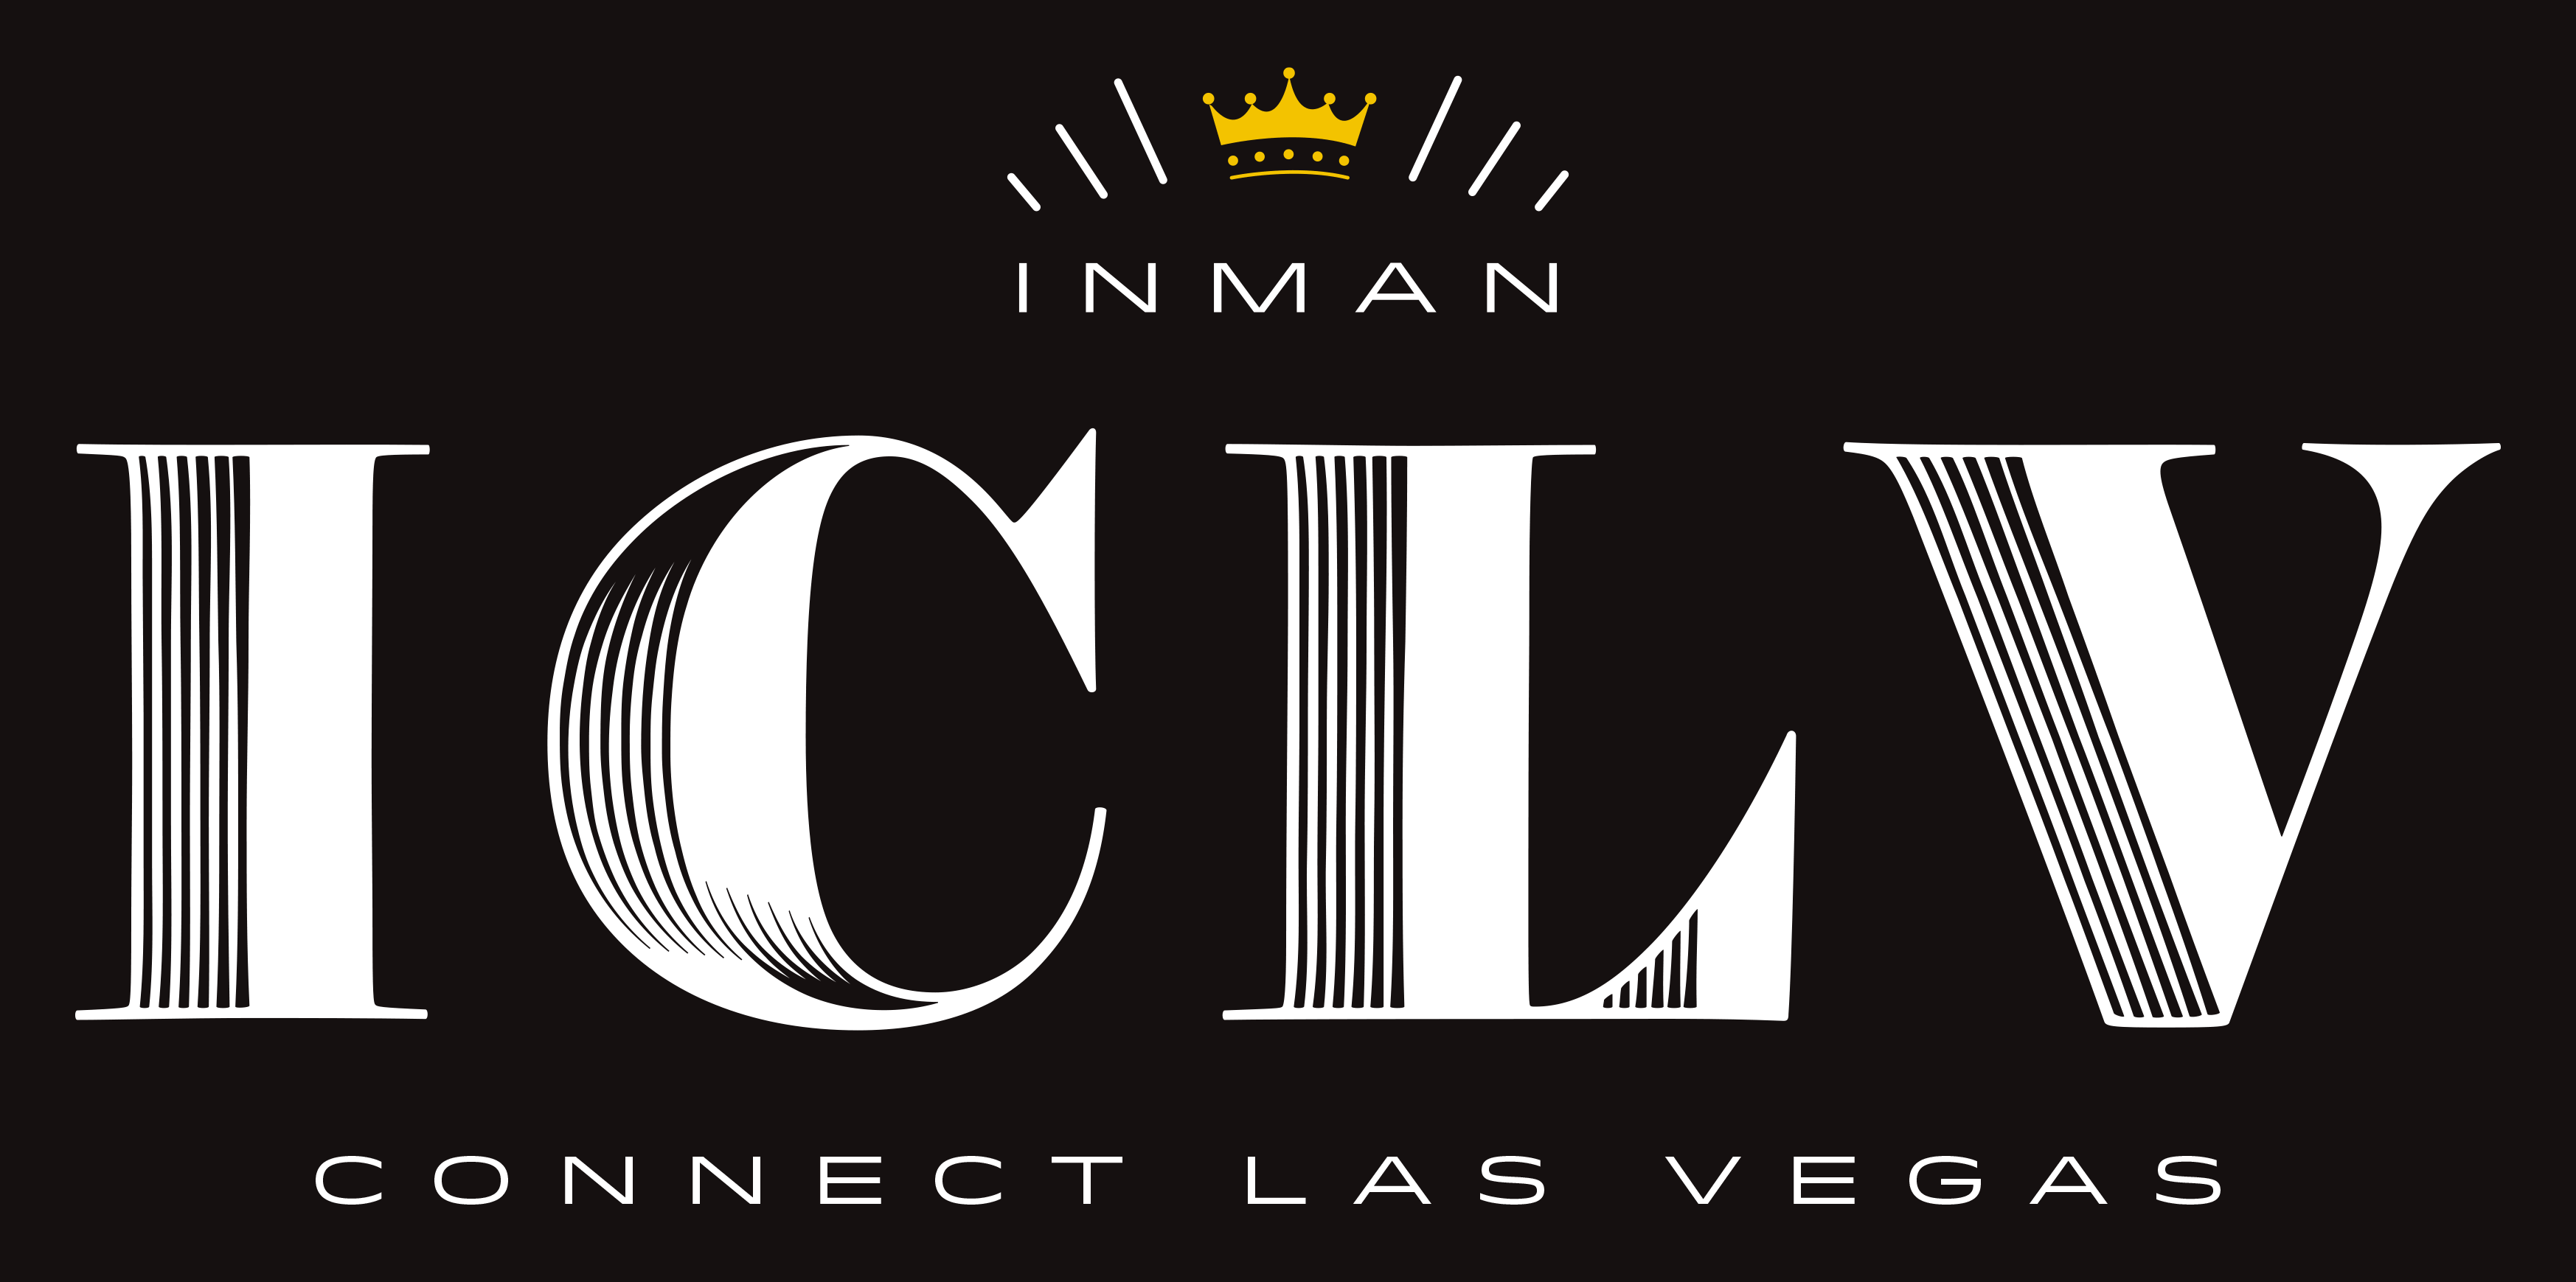 Inman Connect Las Vegas 2021